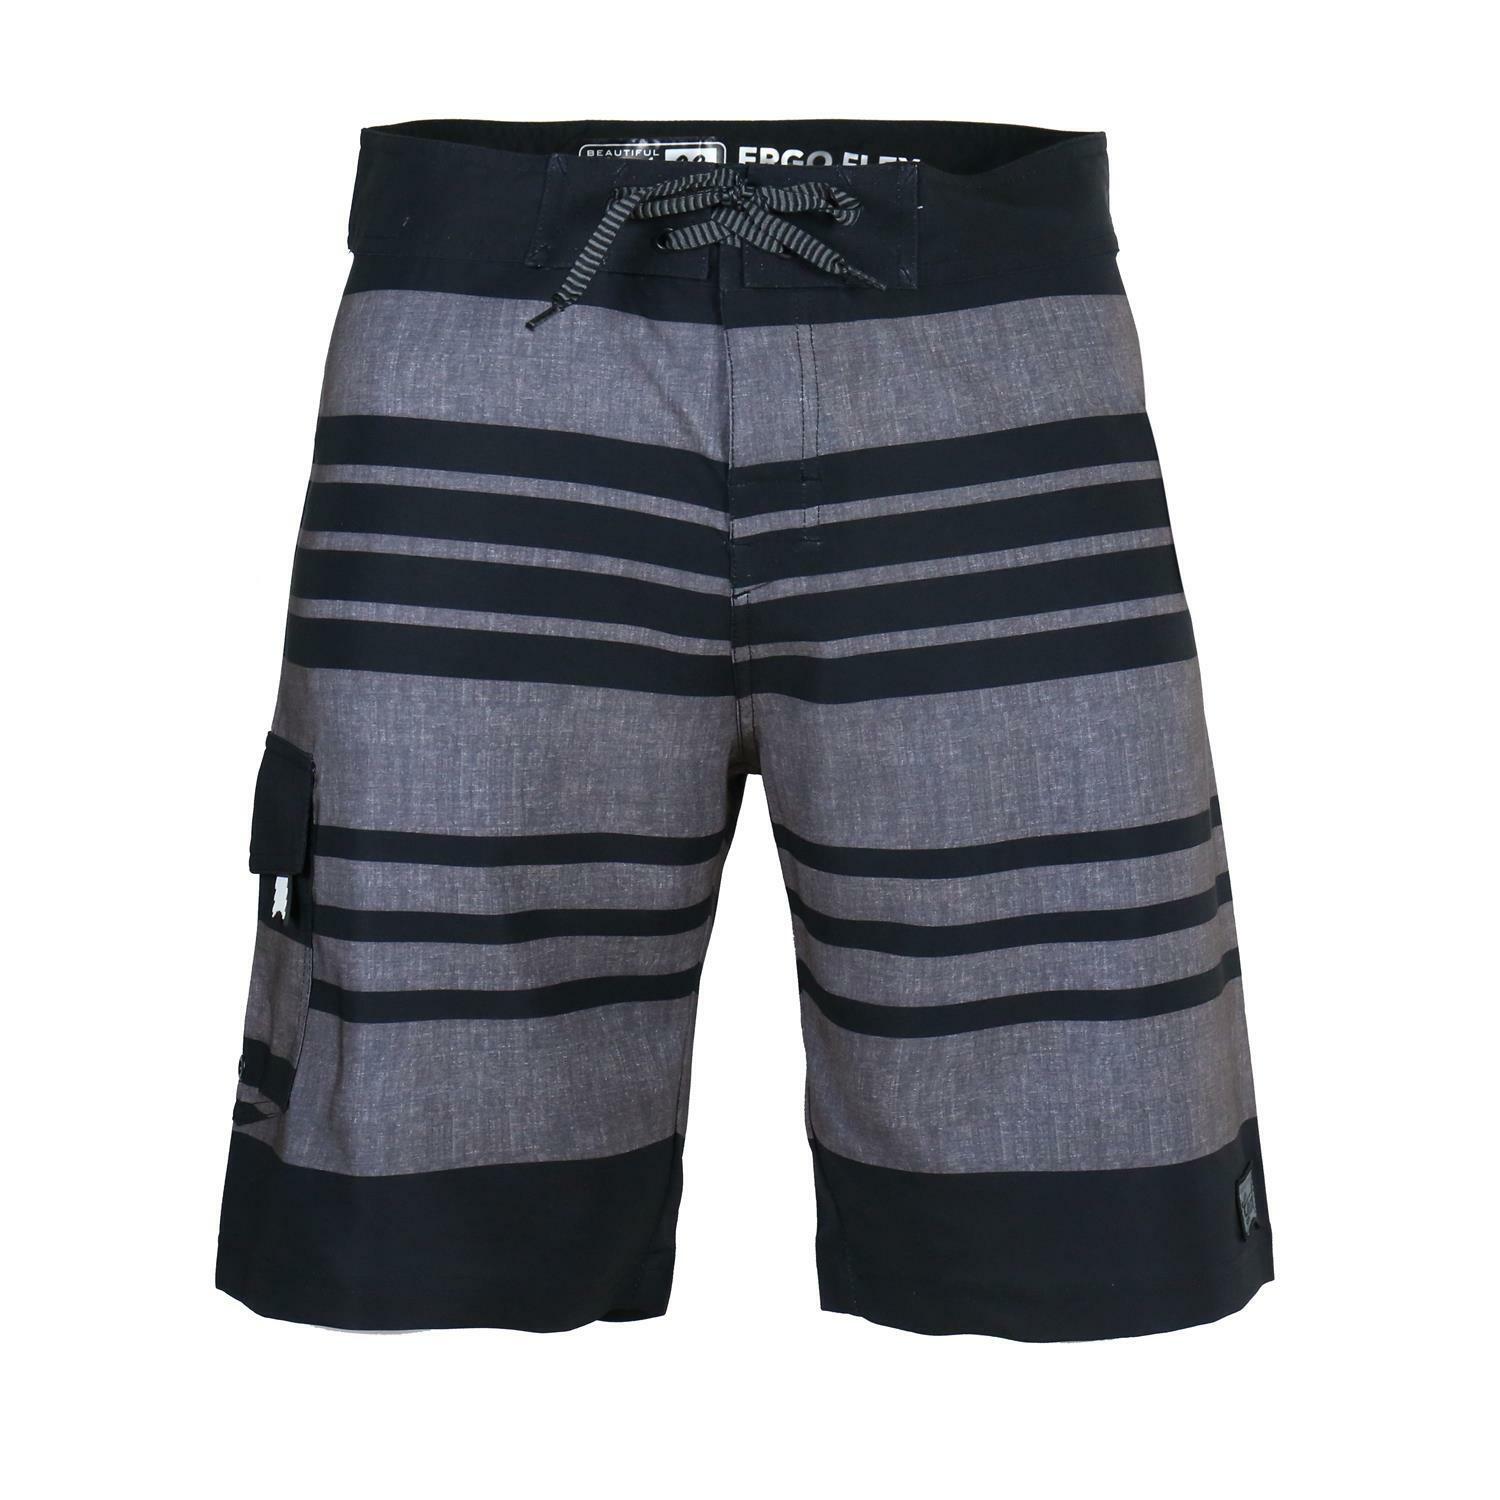 Beautiful Giant Men's Striped Beach Vacation Swim Trunks Swimwear Board Shorts